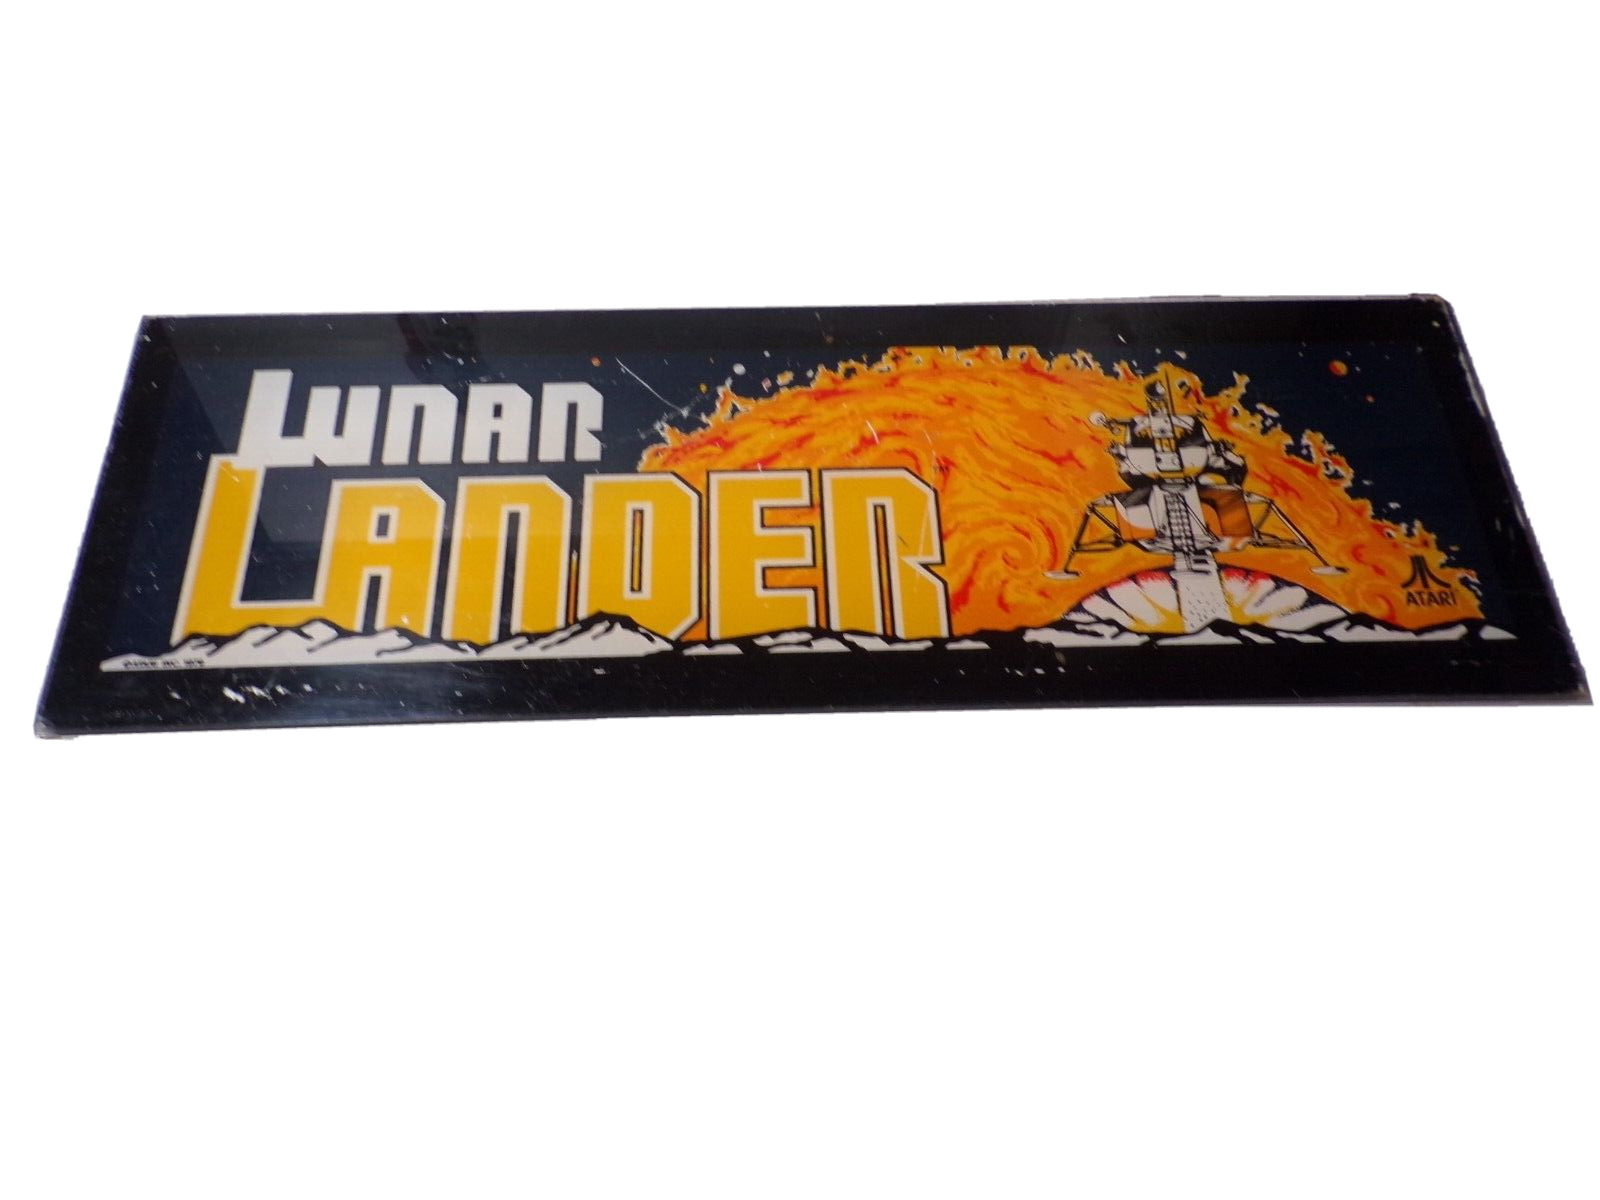 Lunar Lander Atari Arcade 1979 Original Arcade Game Artwork Plexiglass Header